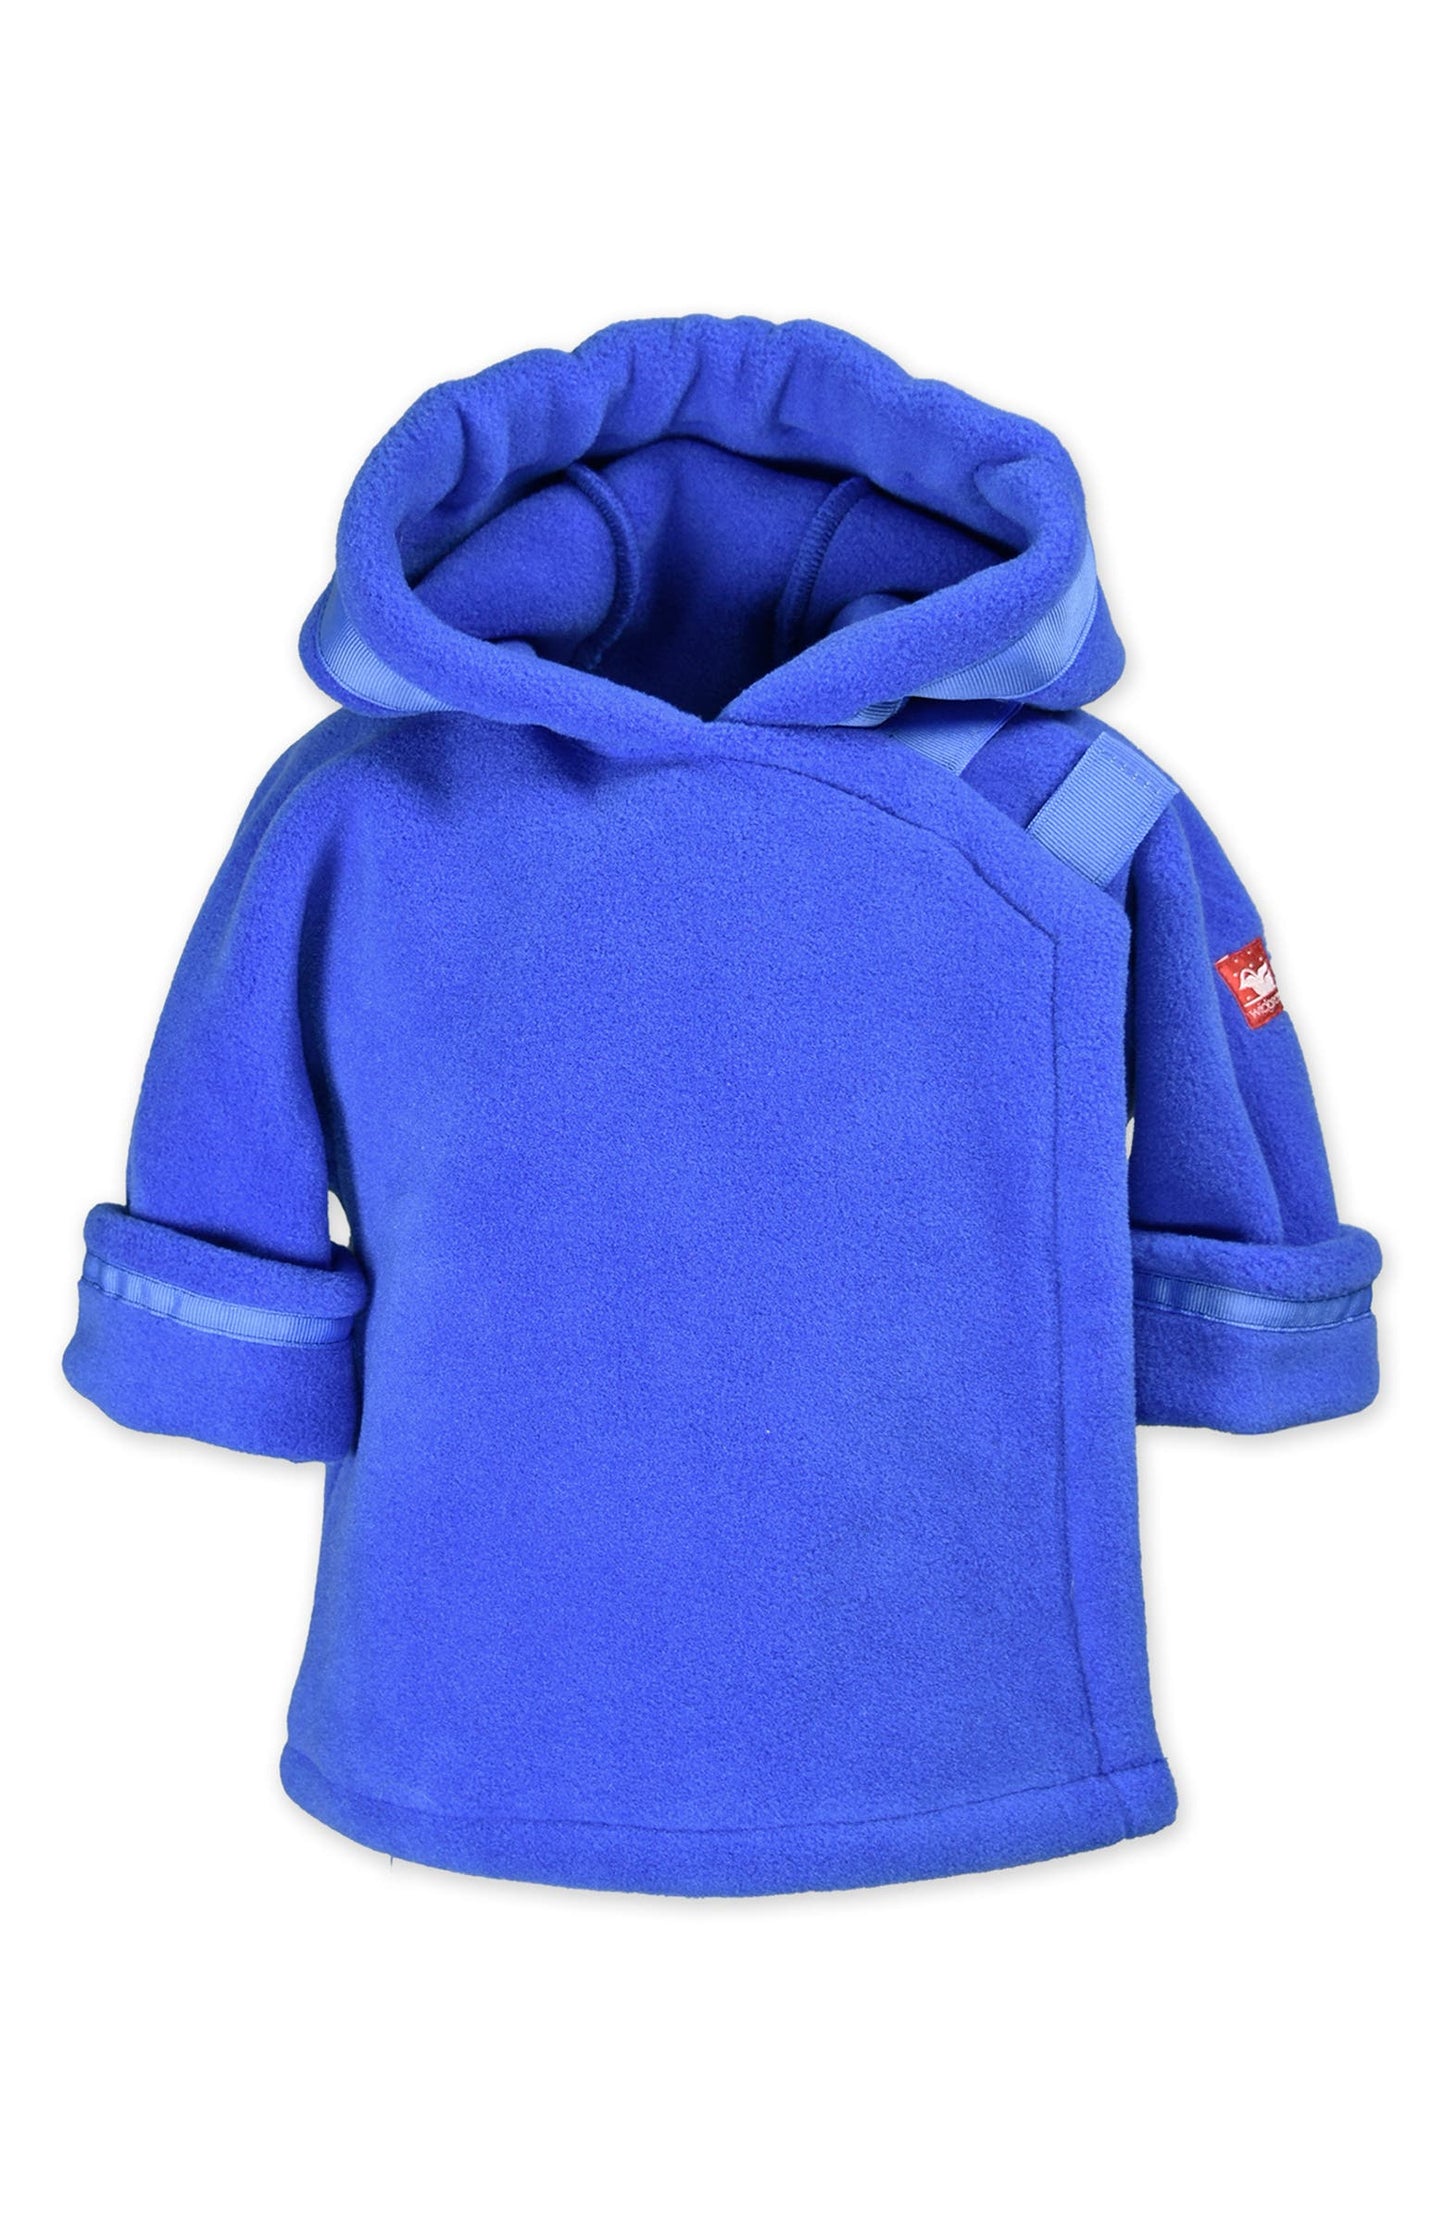 Widgeon Warmplus Favorite Jacket - Royal Blue